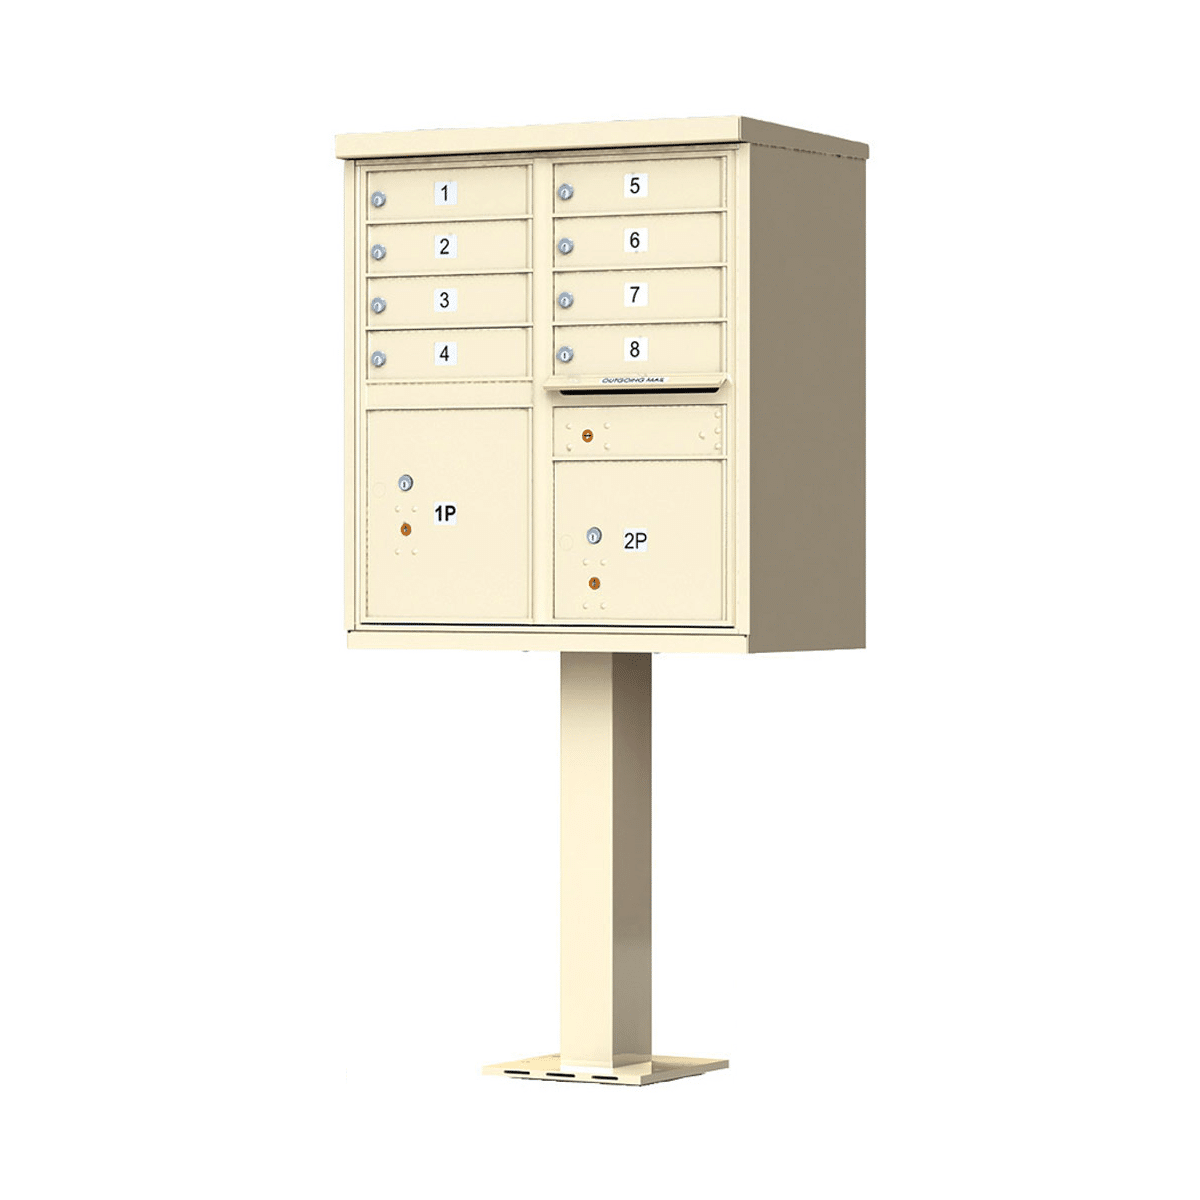 Florence CBU Cluster Mailbox – 8 Tenant Doors, 2 Parcel Lockers Product Image